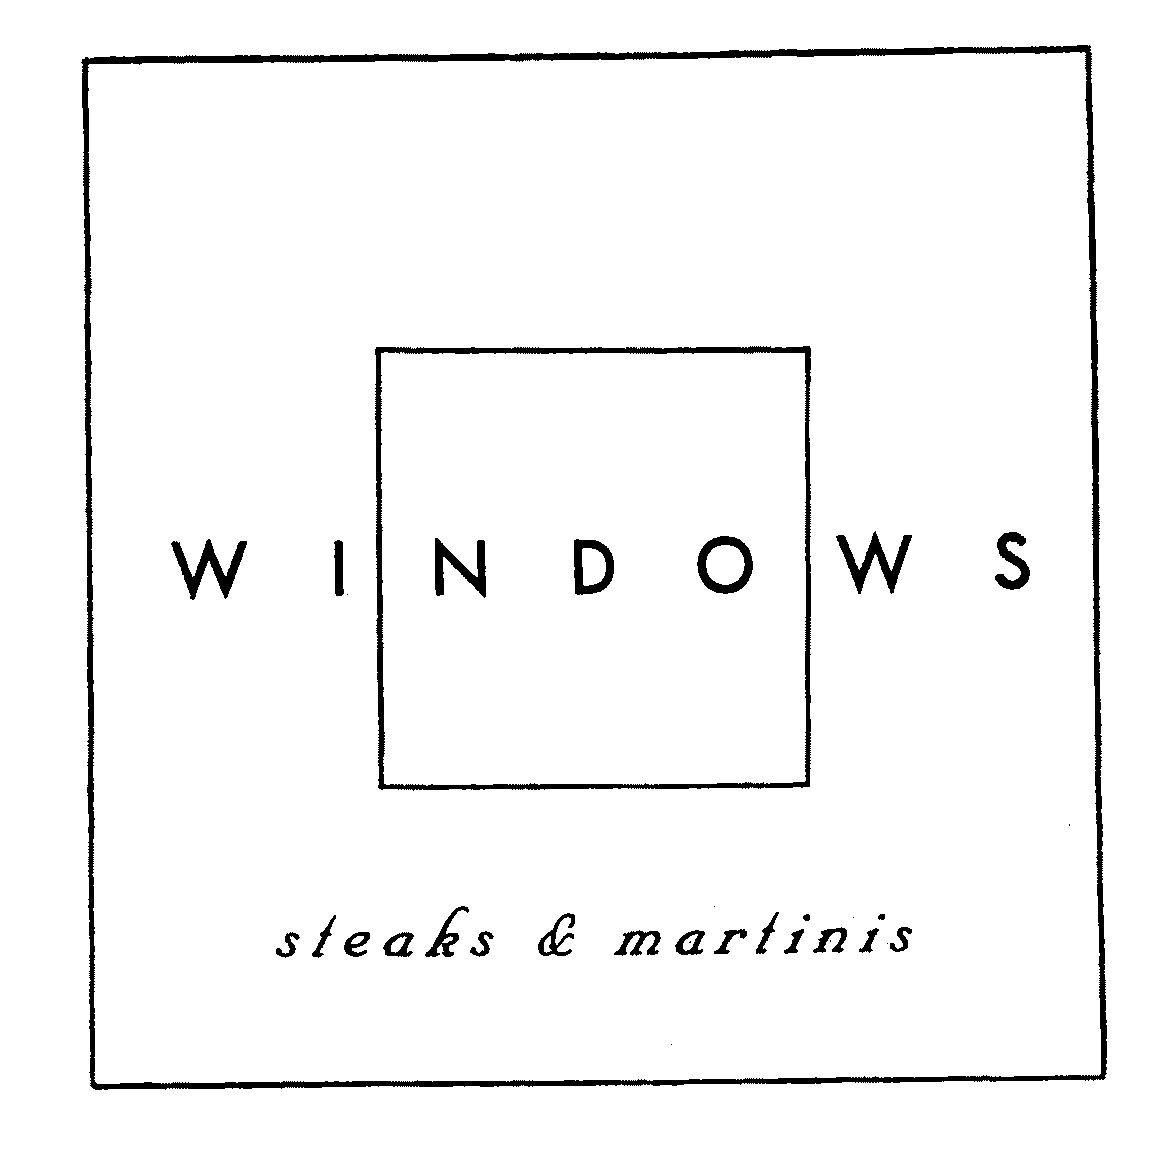  WINDOWS STEAKS &amp; MARTINIS